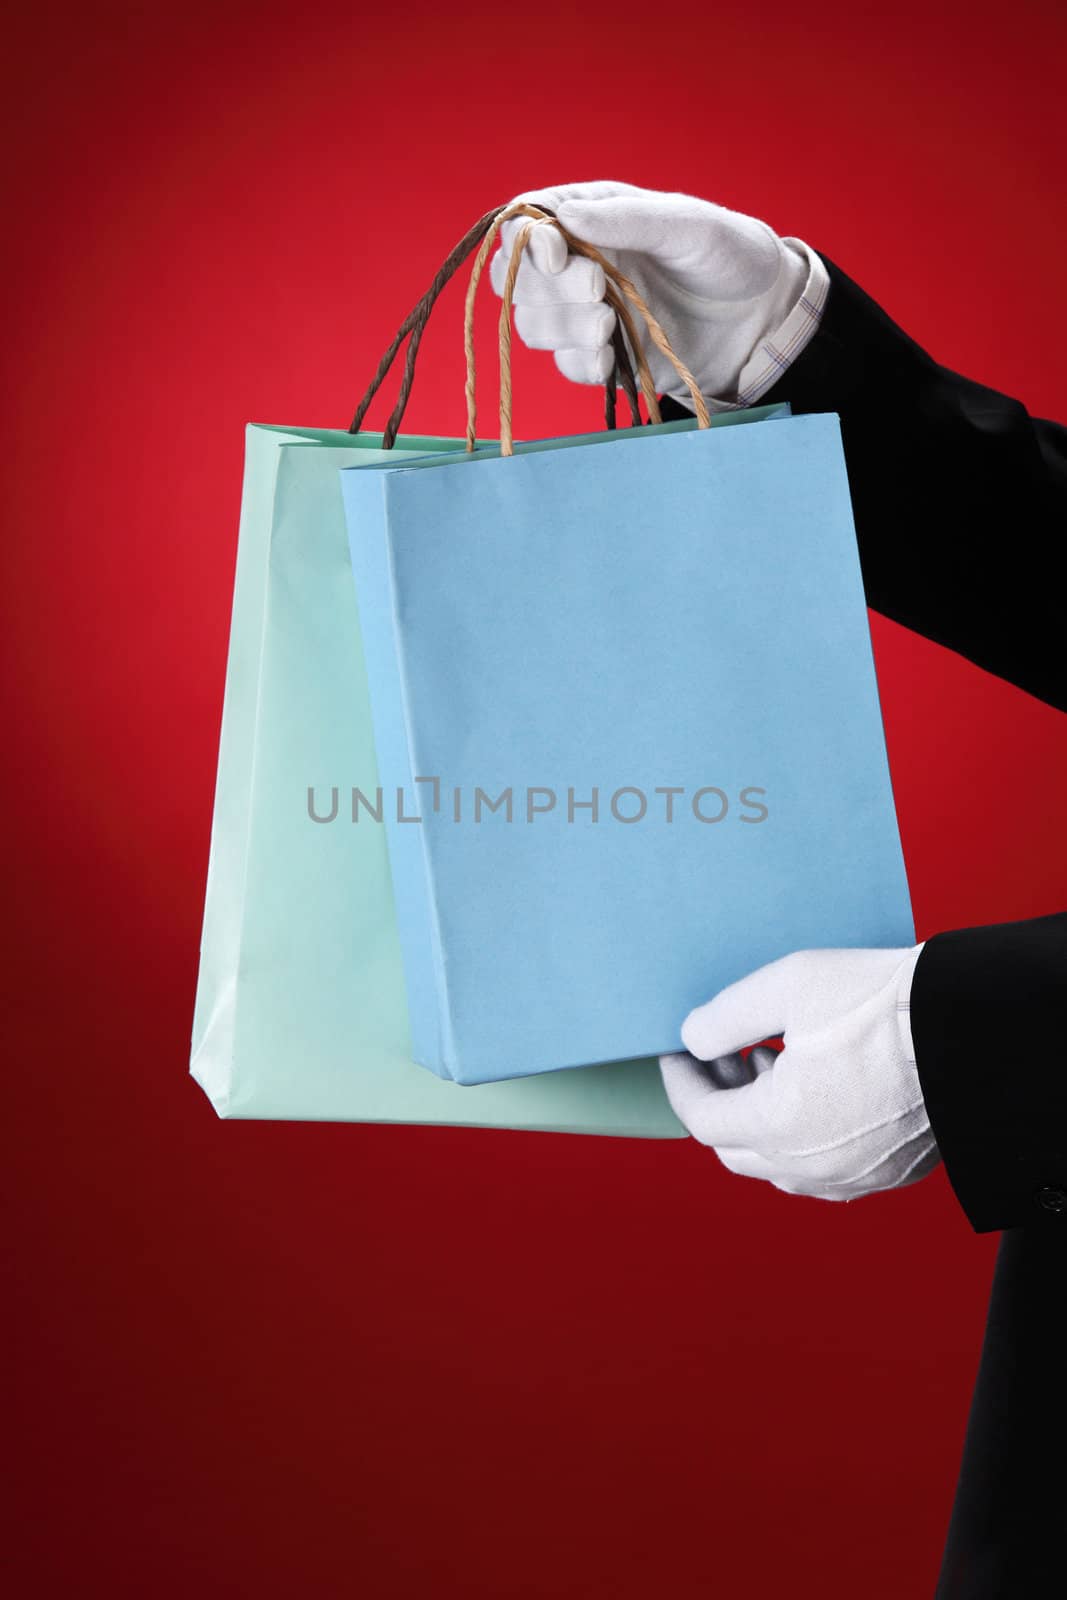 Doorman wearing white gloves, holding shopping bags